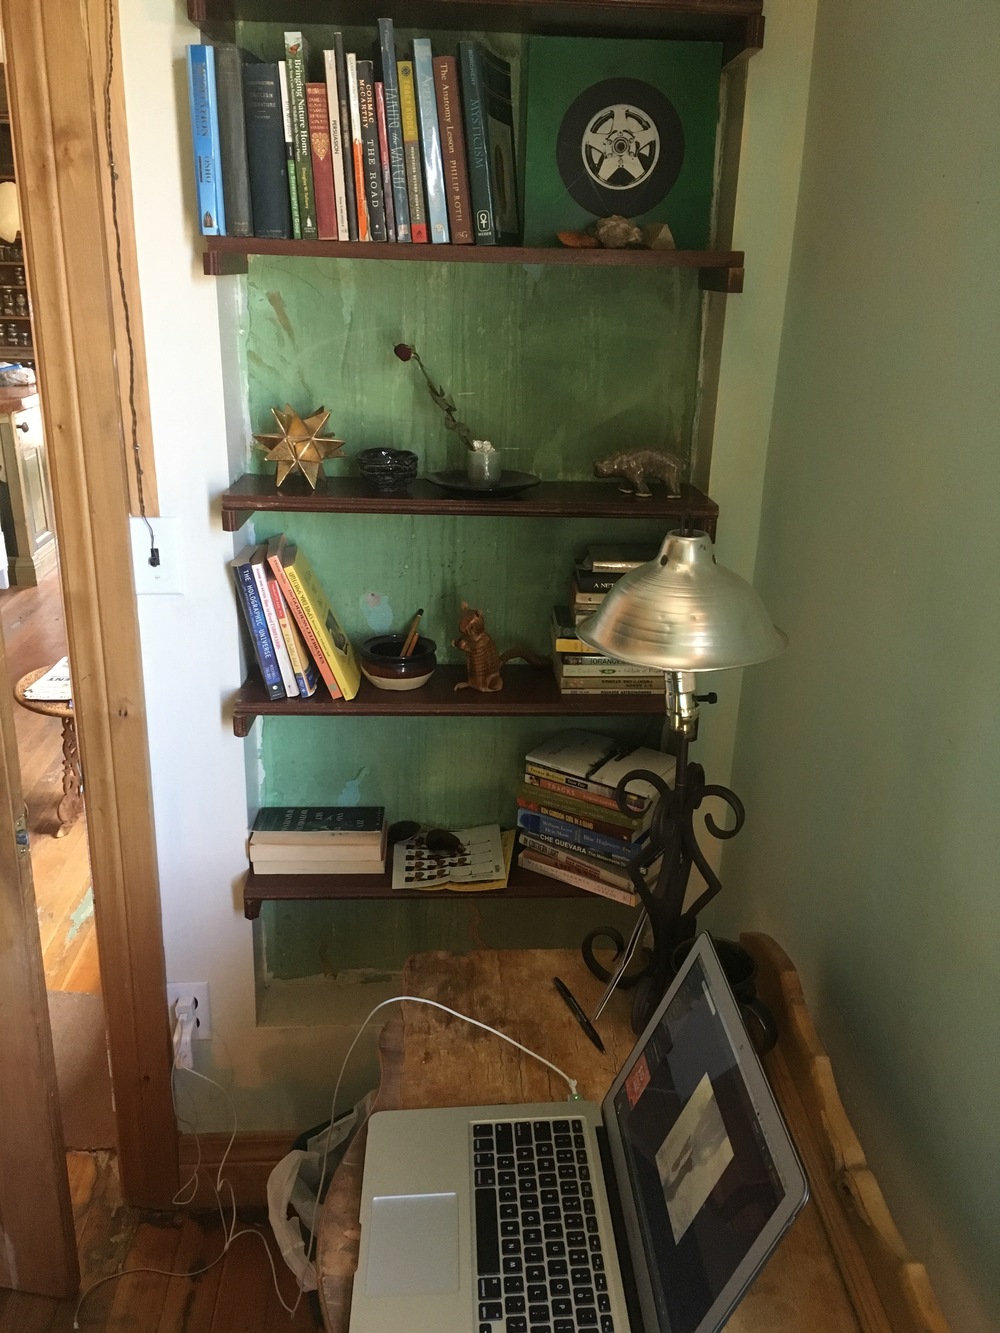 Bookshelf by my desk